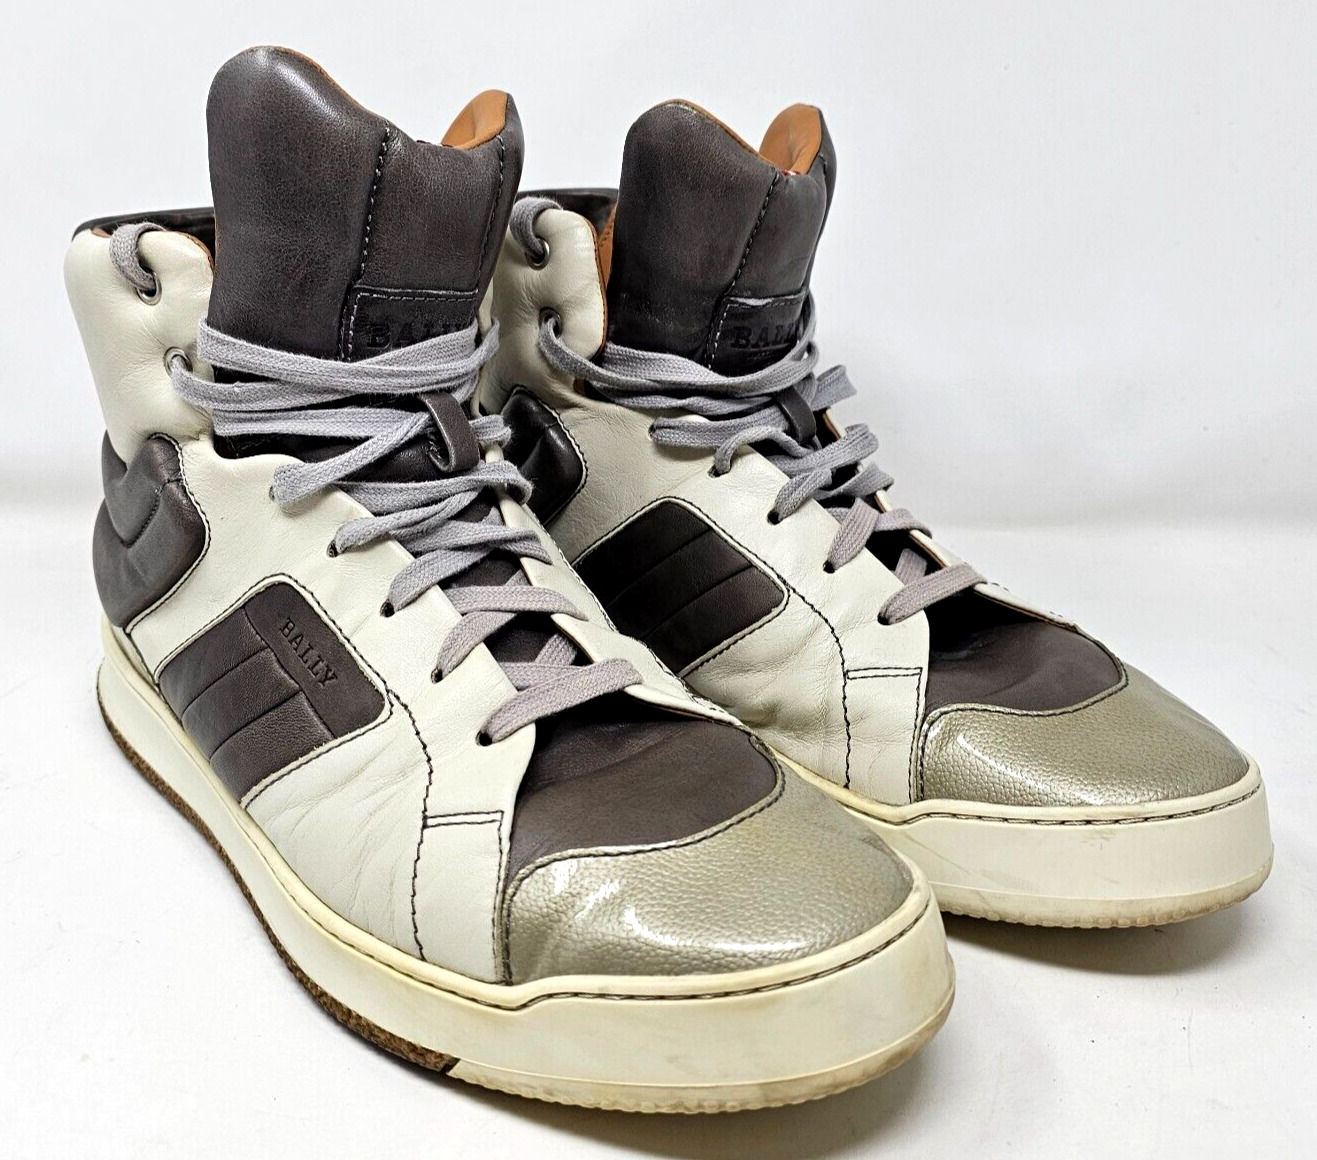 Bally Odar Leather High Top Sneaker Shoes Men Size 11 D